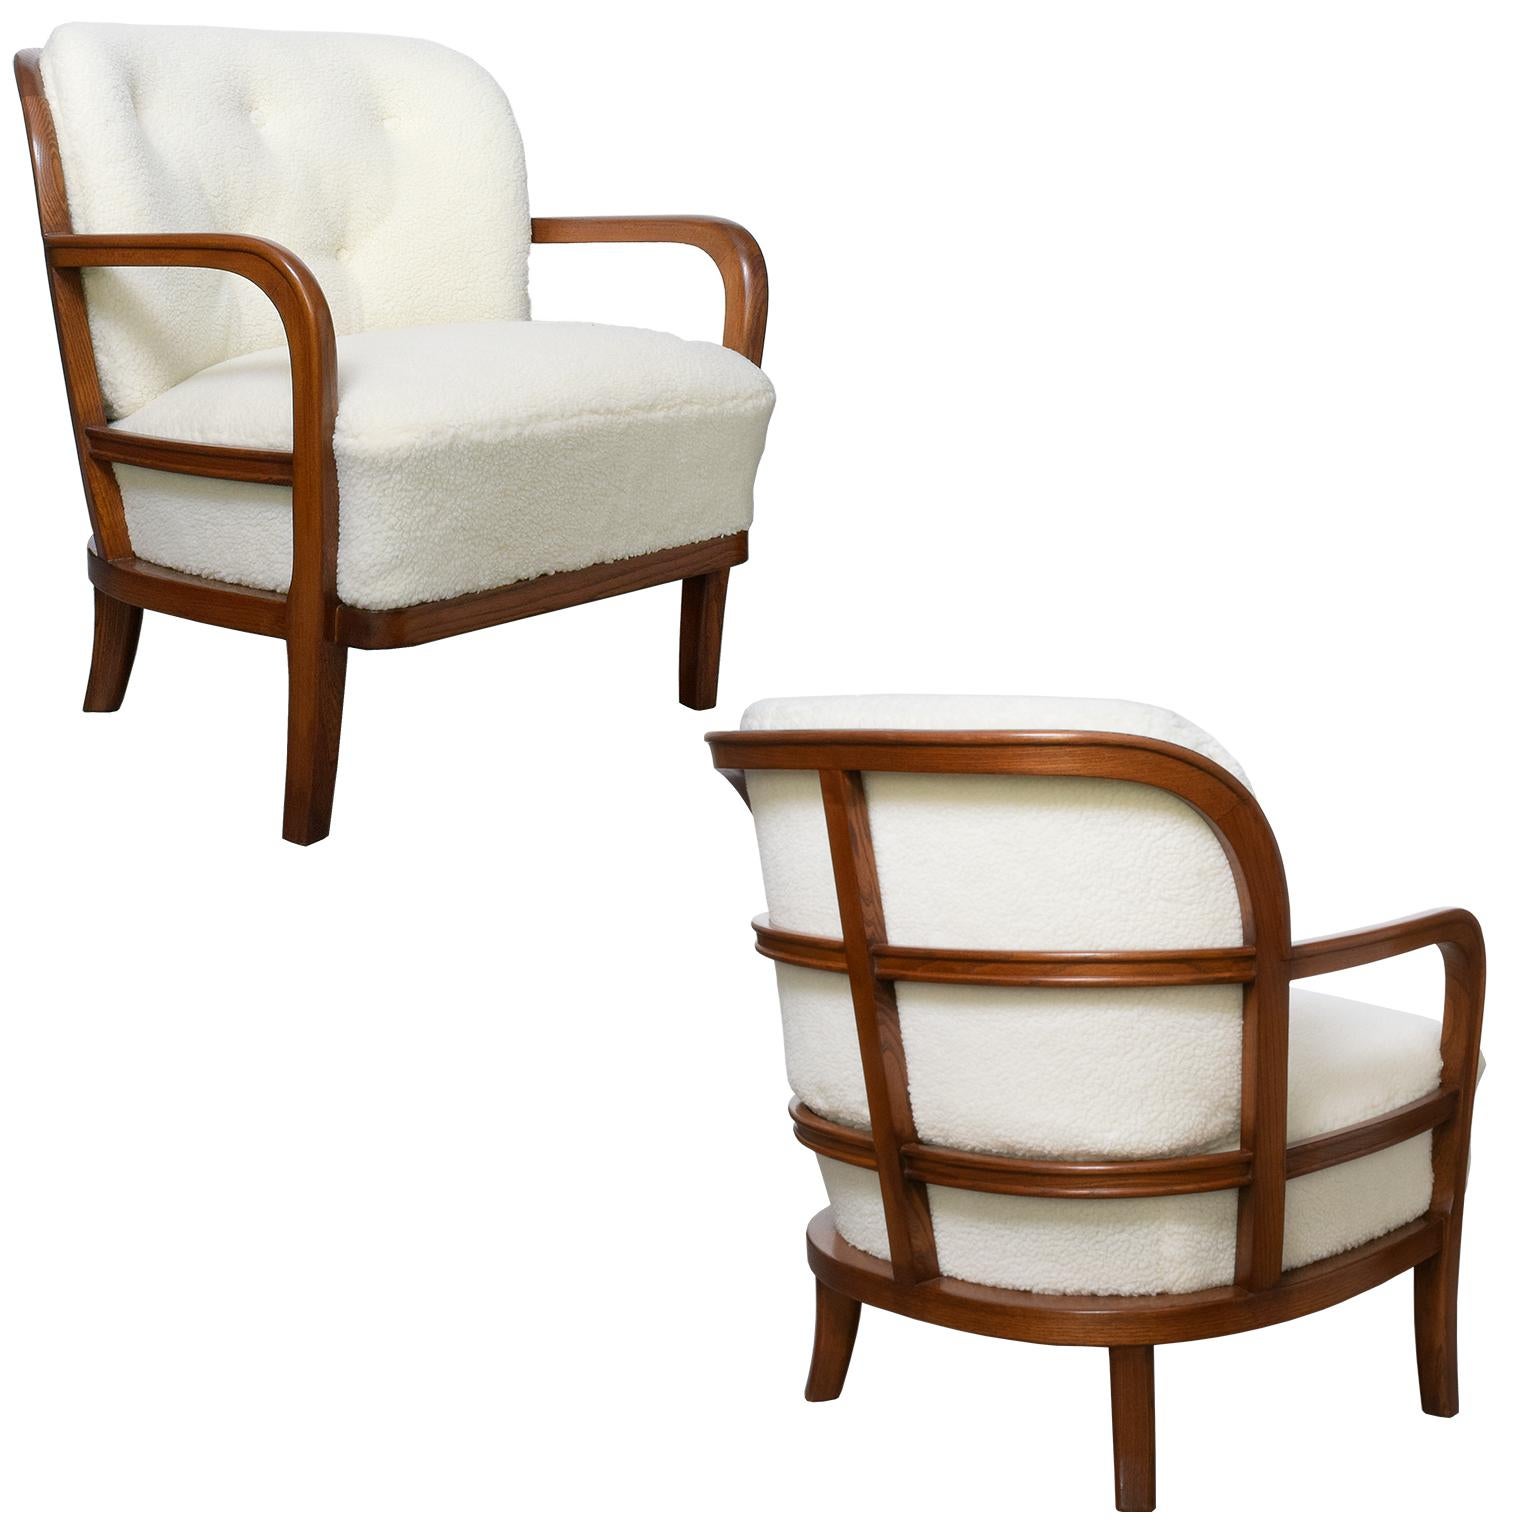 Pair of Scandinavian Modern Lounge Chairs by Carl-Johan Boman, Boman OY, Finland